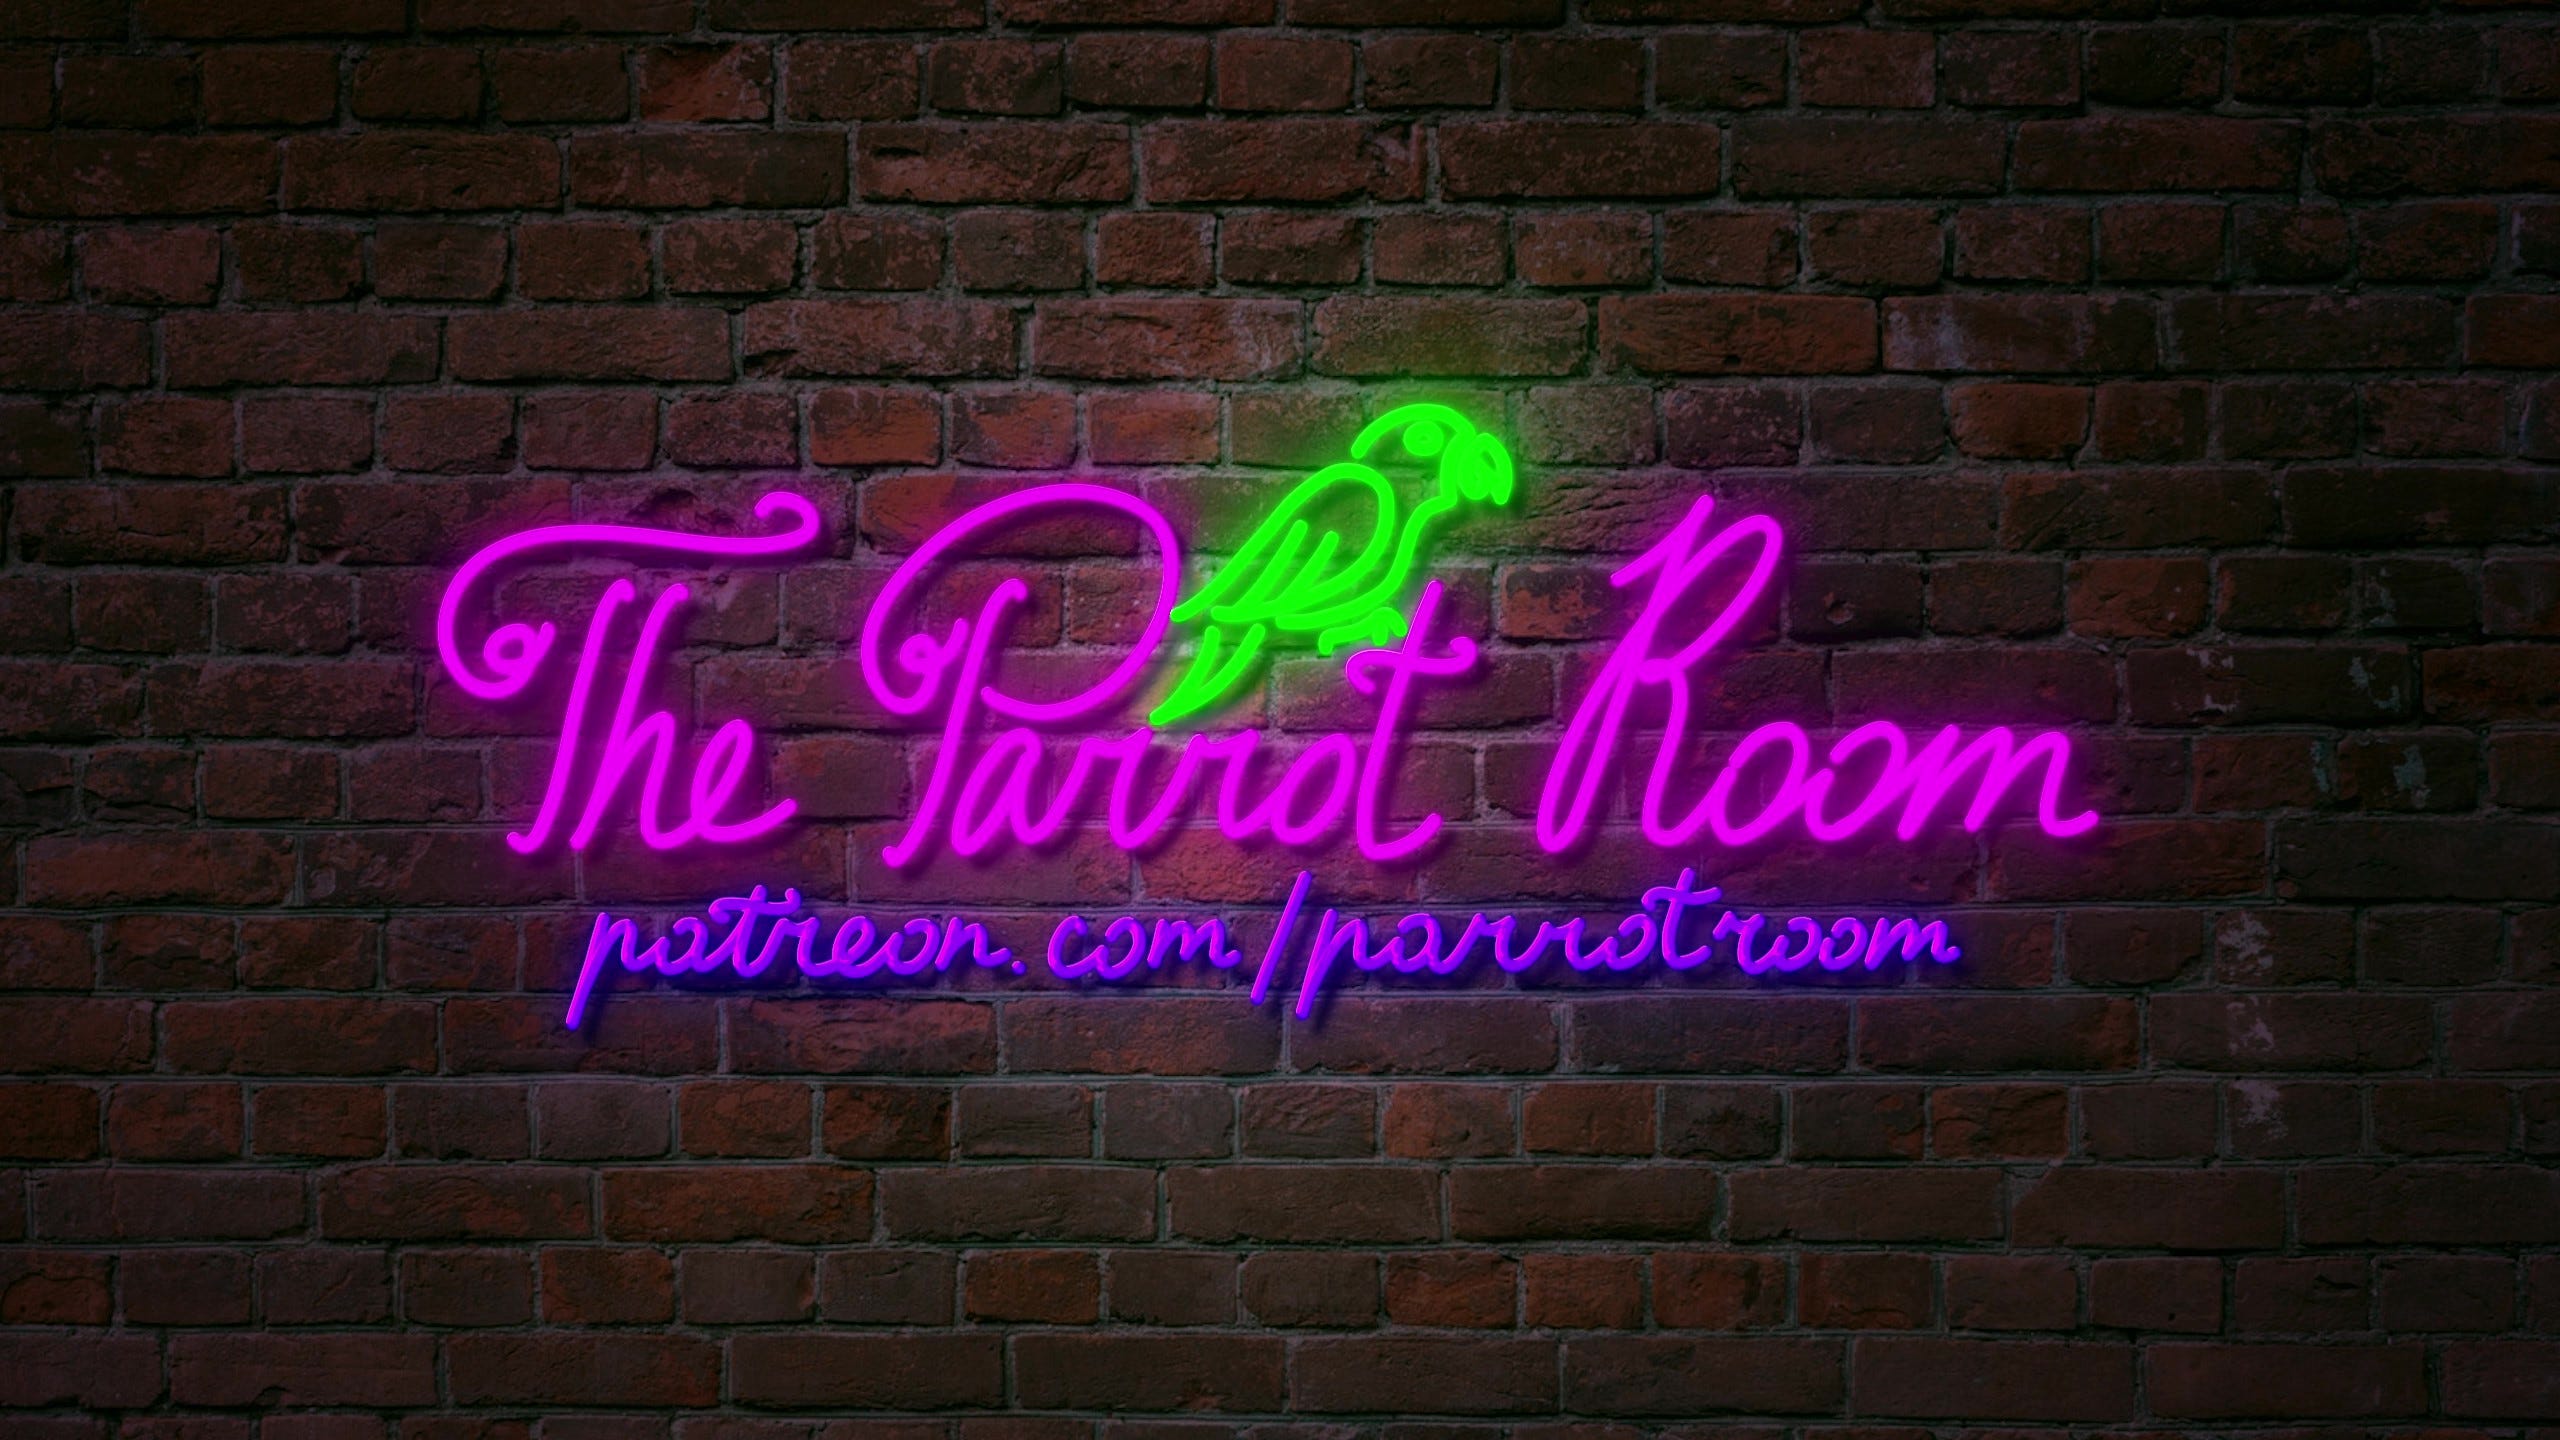 Parrot Room: Don’t Short the Parrot